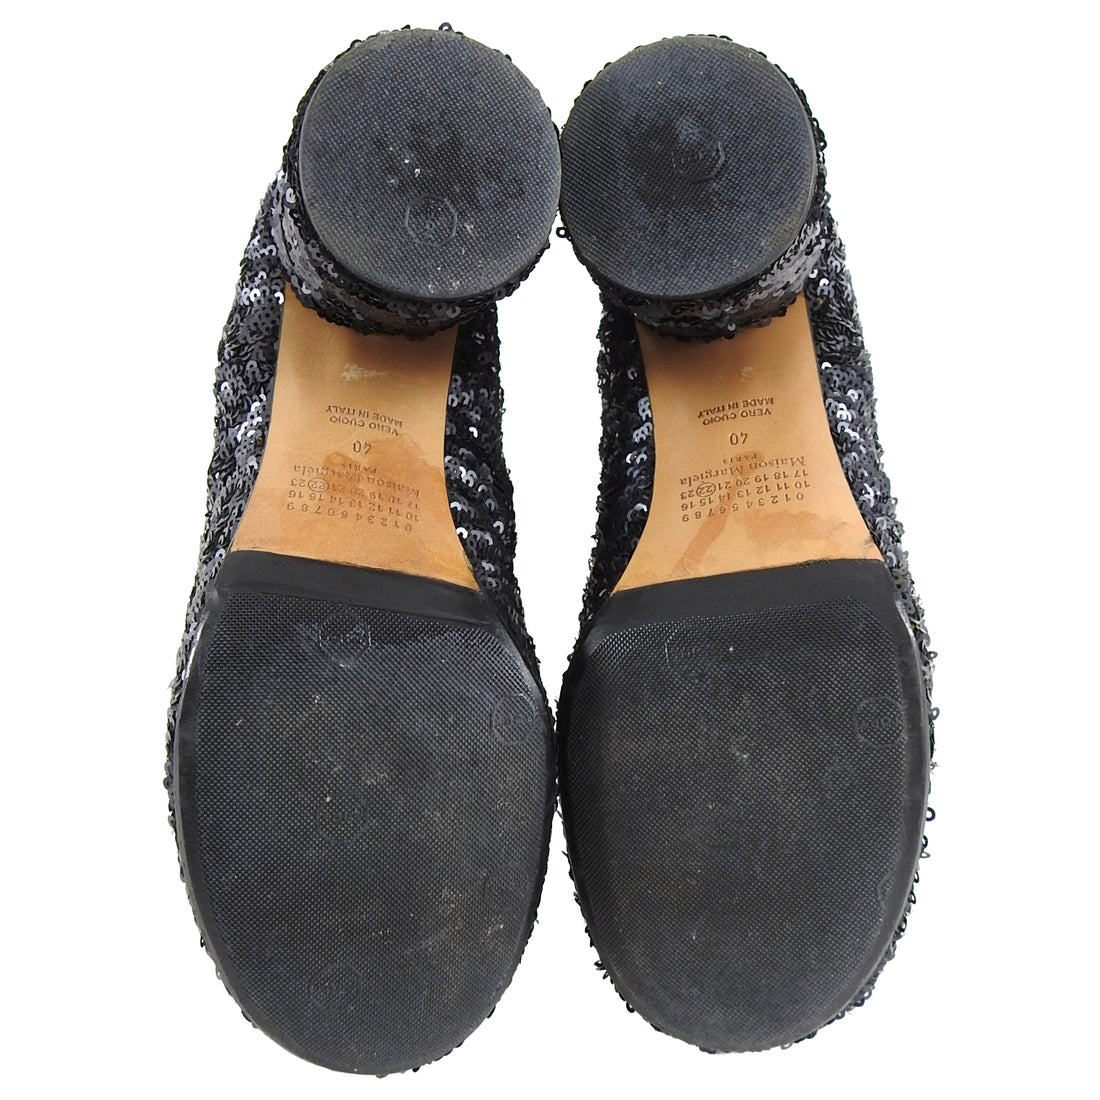 Maison Martin Margiela Black Sequin Disco Ankle Boots - 40